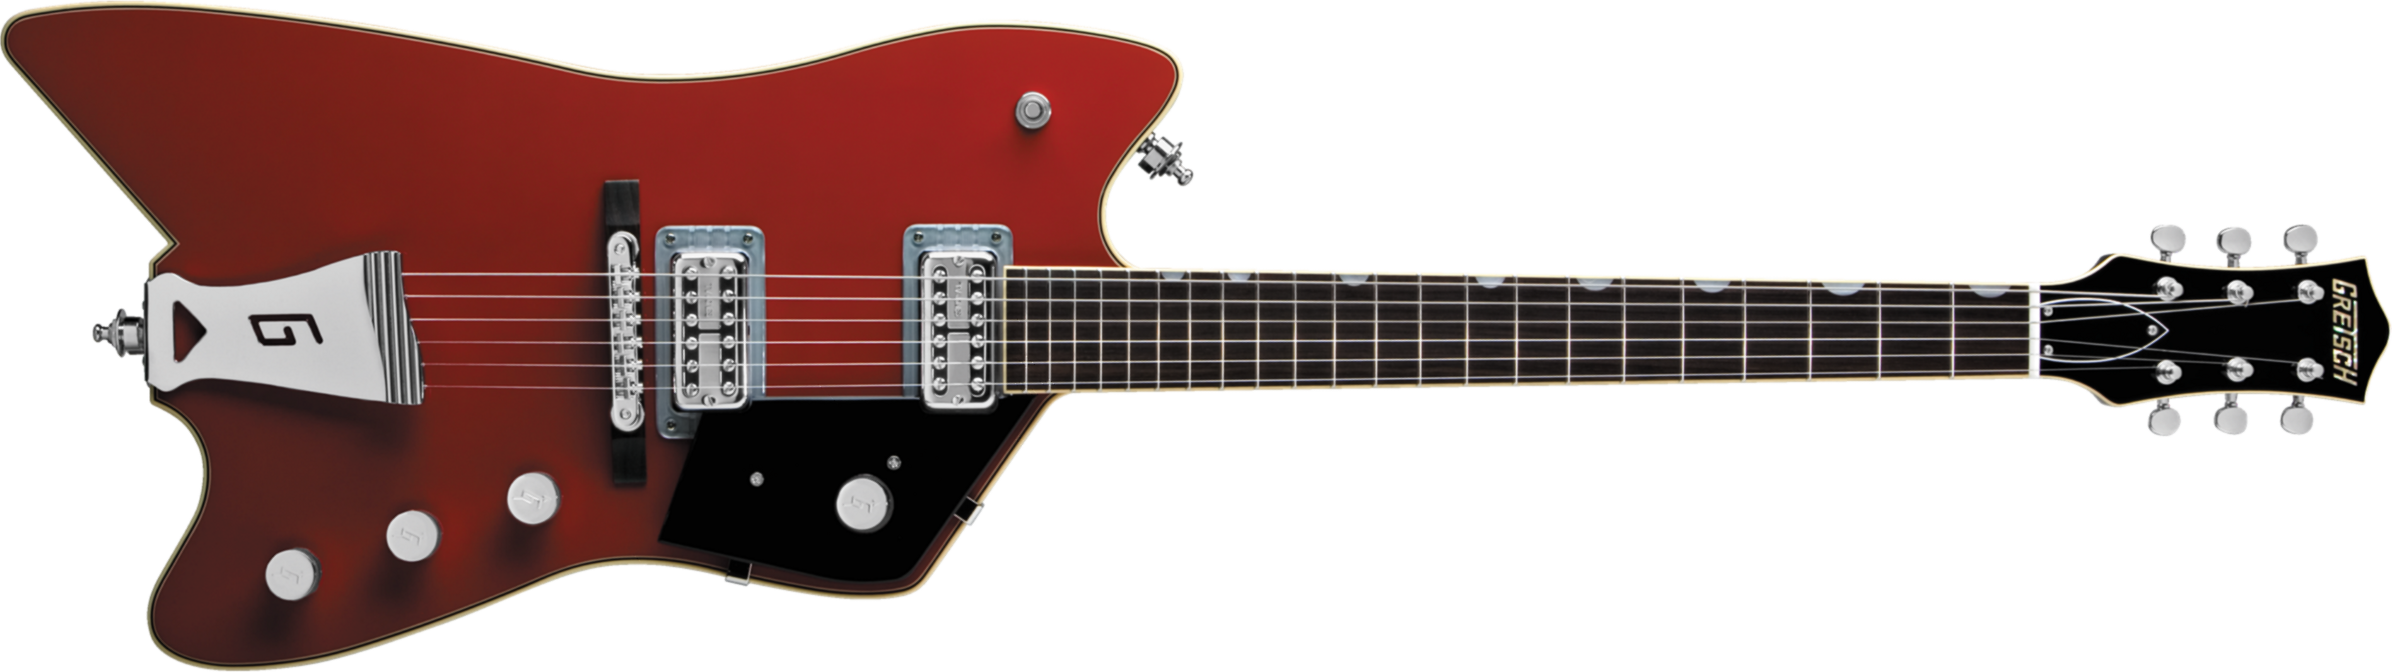 Gretsch G6199 Billy-bo - Firebird Red - Retro rock electric guitar - Main picture